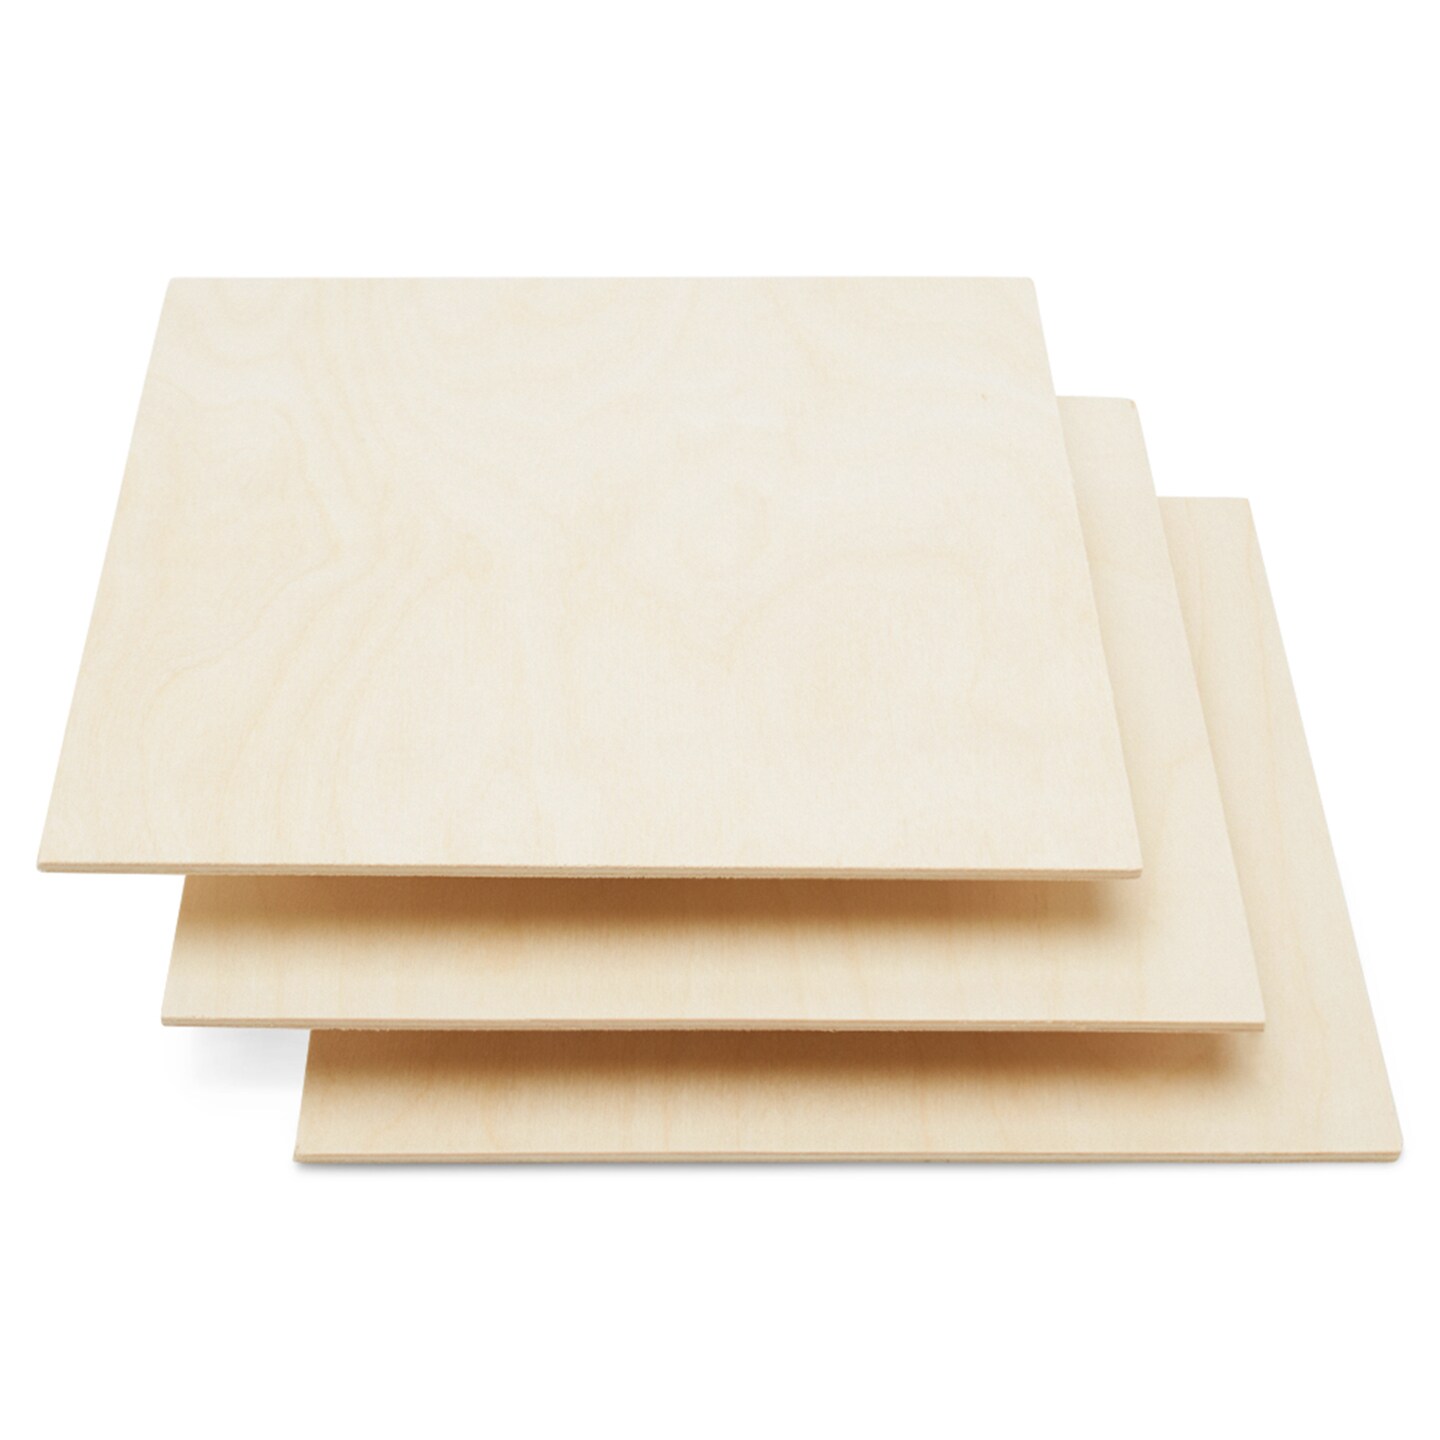 BINOS Balsa Wood Sheets (12 x 4 x 1/8, Pack of 5), Model Grade Hobby  Craft Balsa Wood Sheet Thin Plank, Perfect for Modeling, Crafts, Hobbies